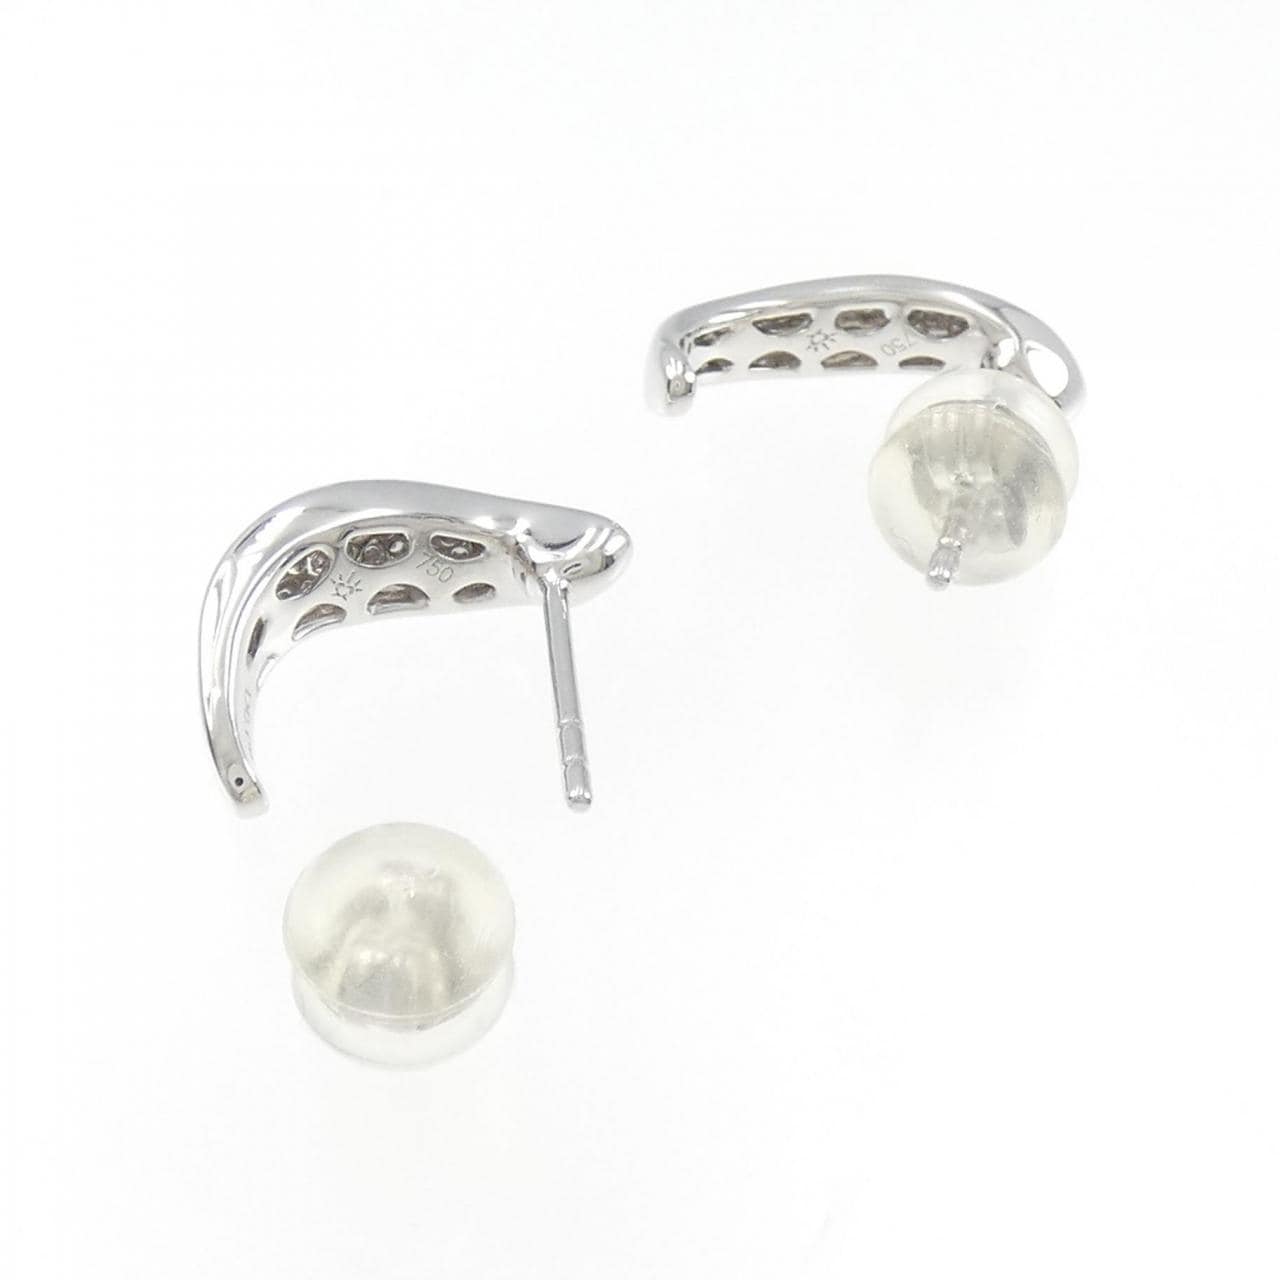 750WG Diamond earrings 0.18CT